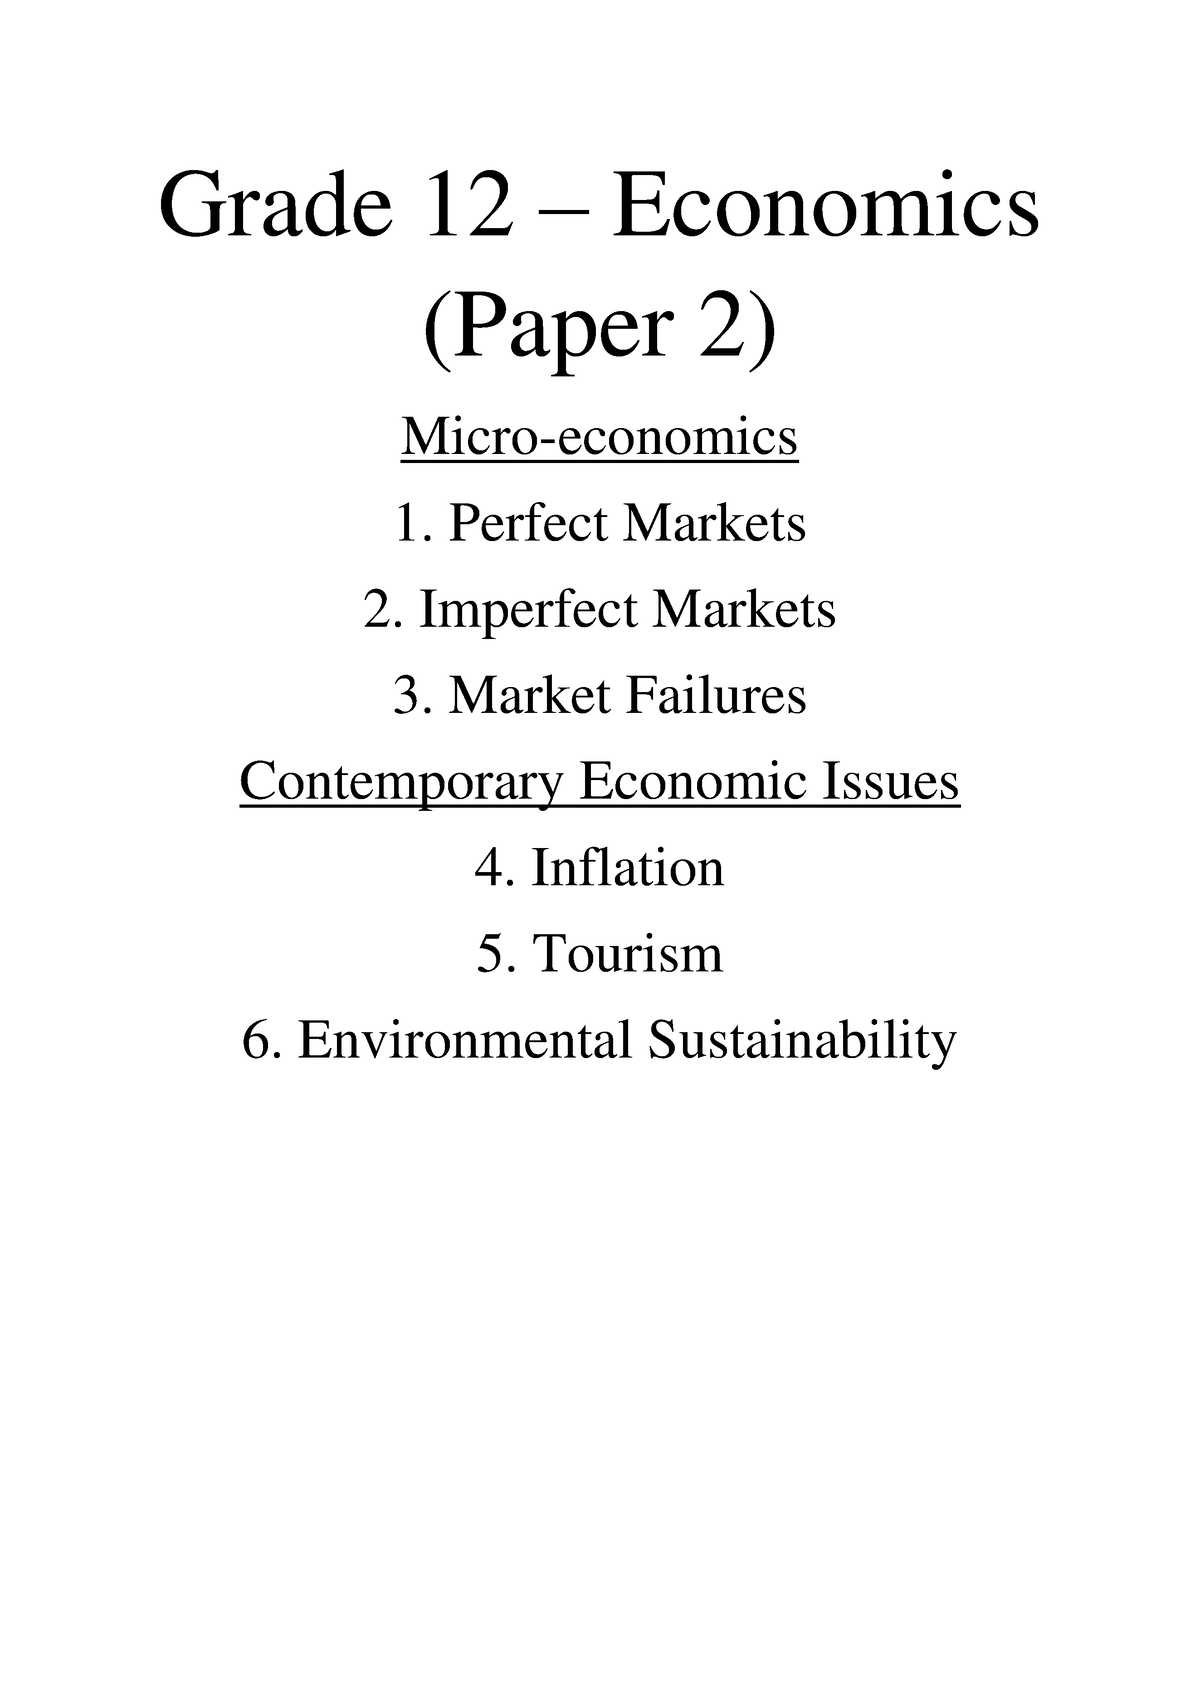 economics paper 2 essays